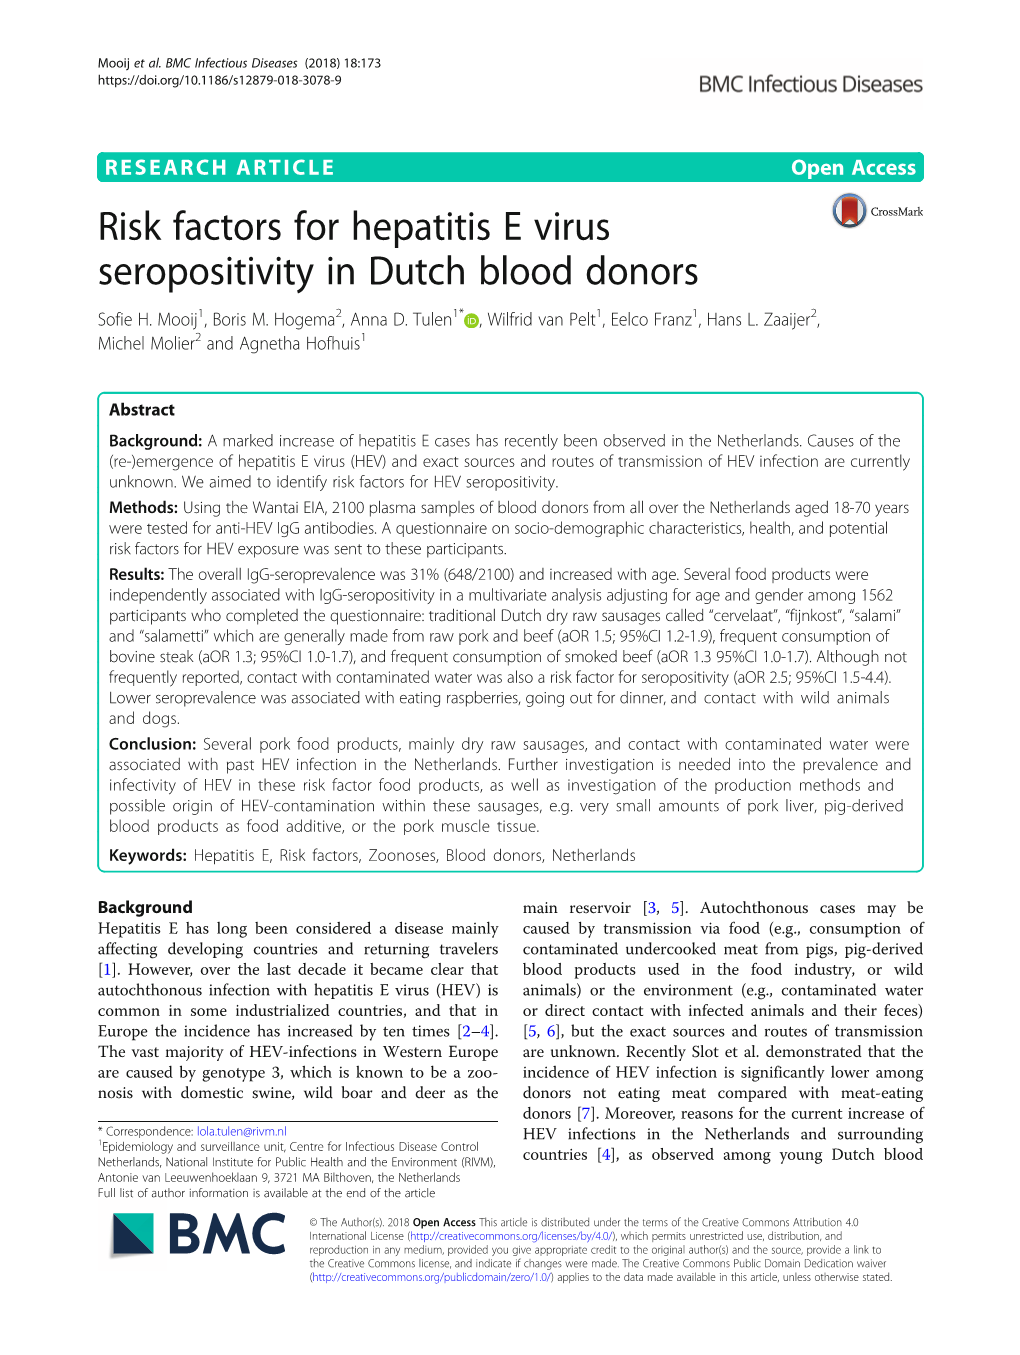 Risk Factors for Hepatitis E Virus Seropositivity in Dutch Blood Donors Sofie H